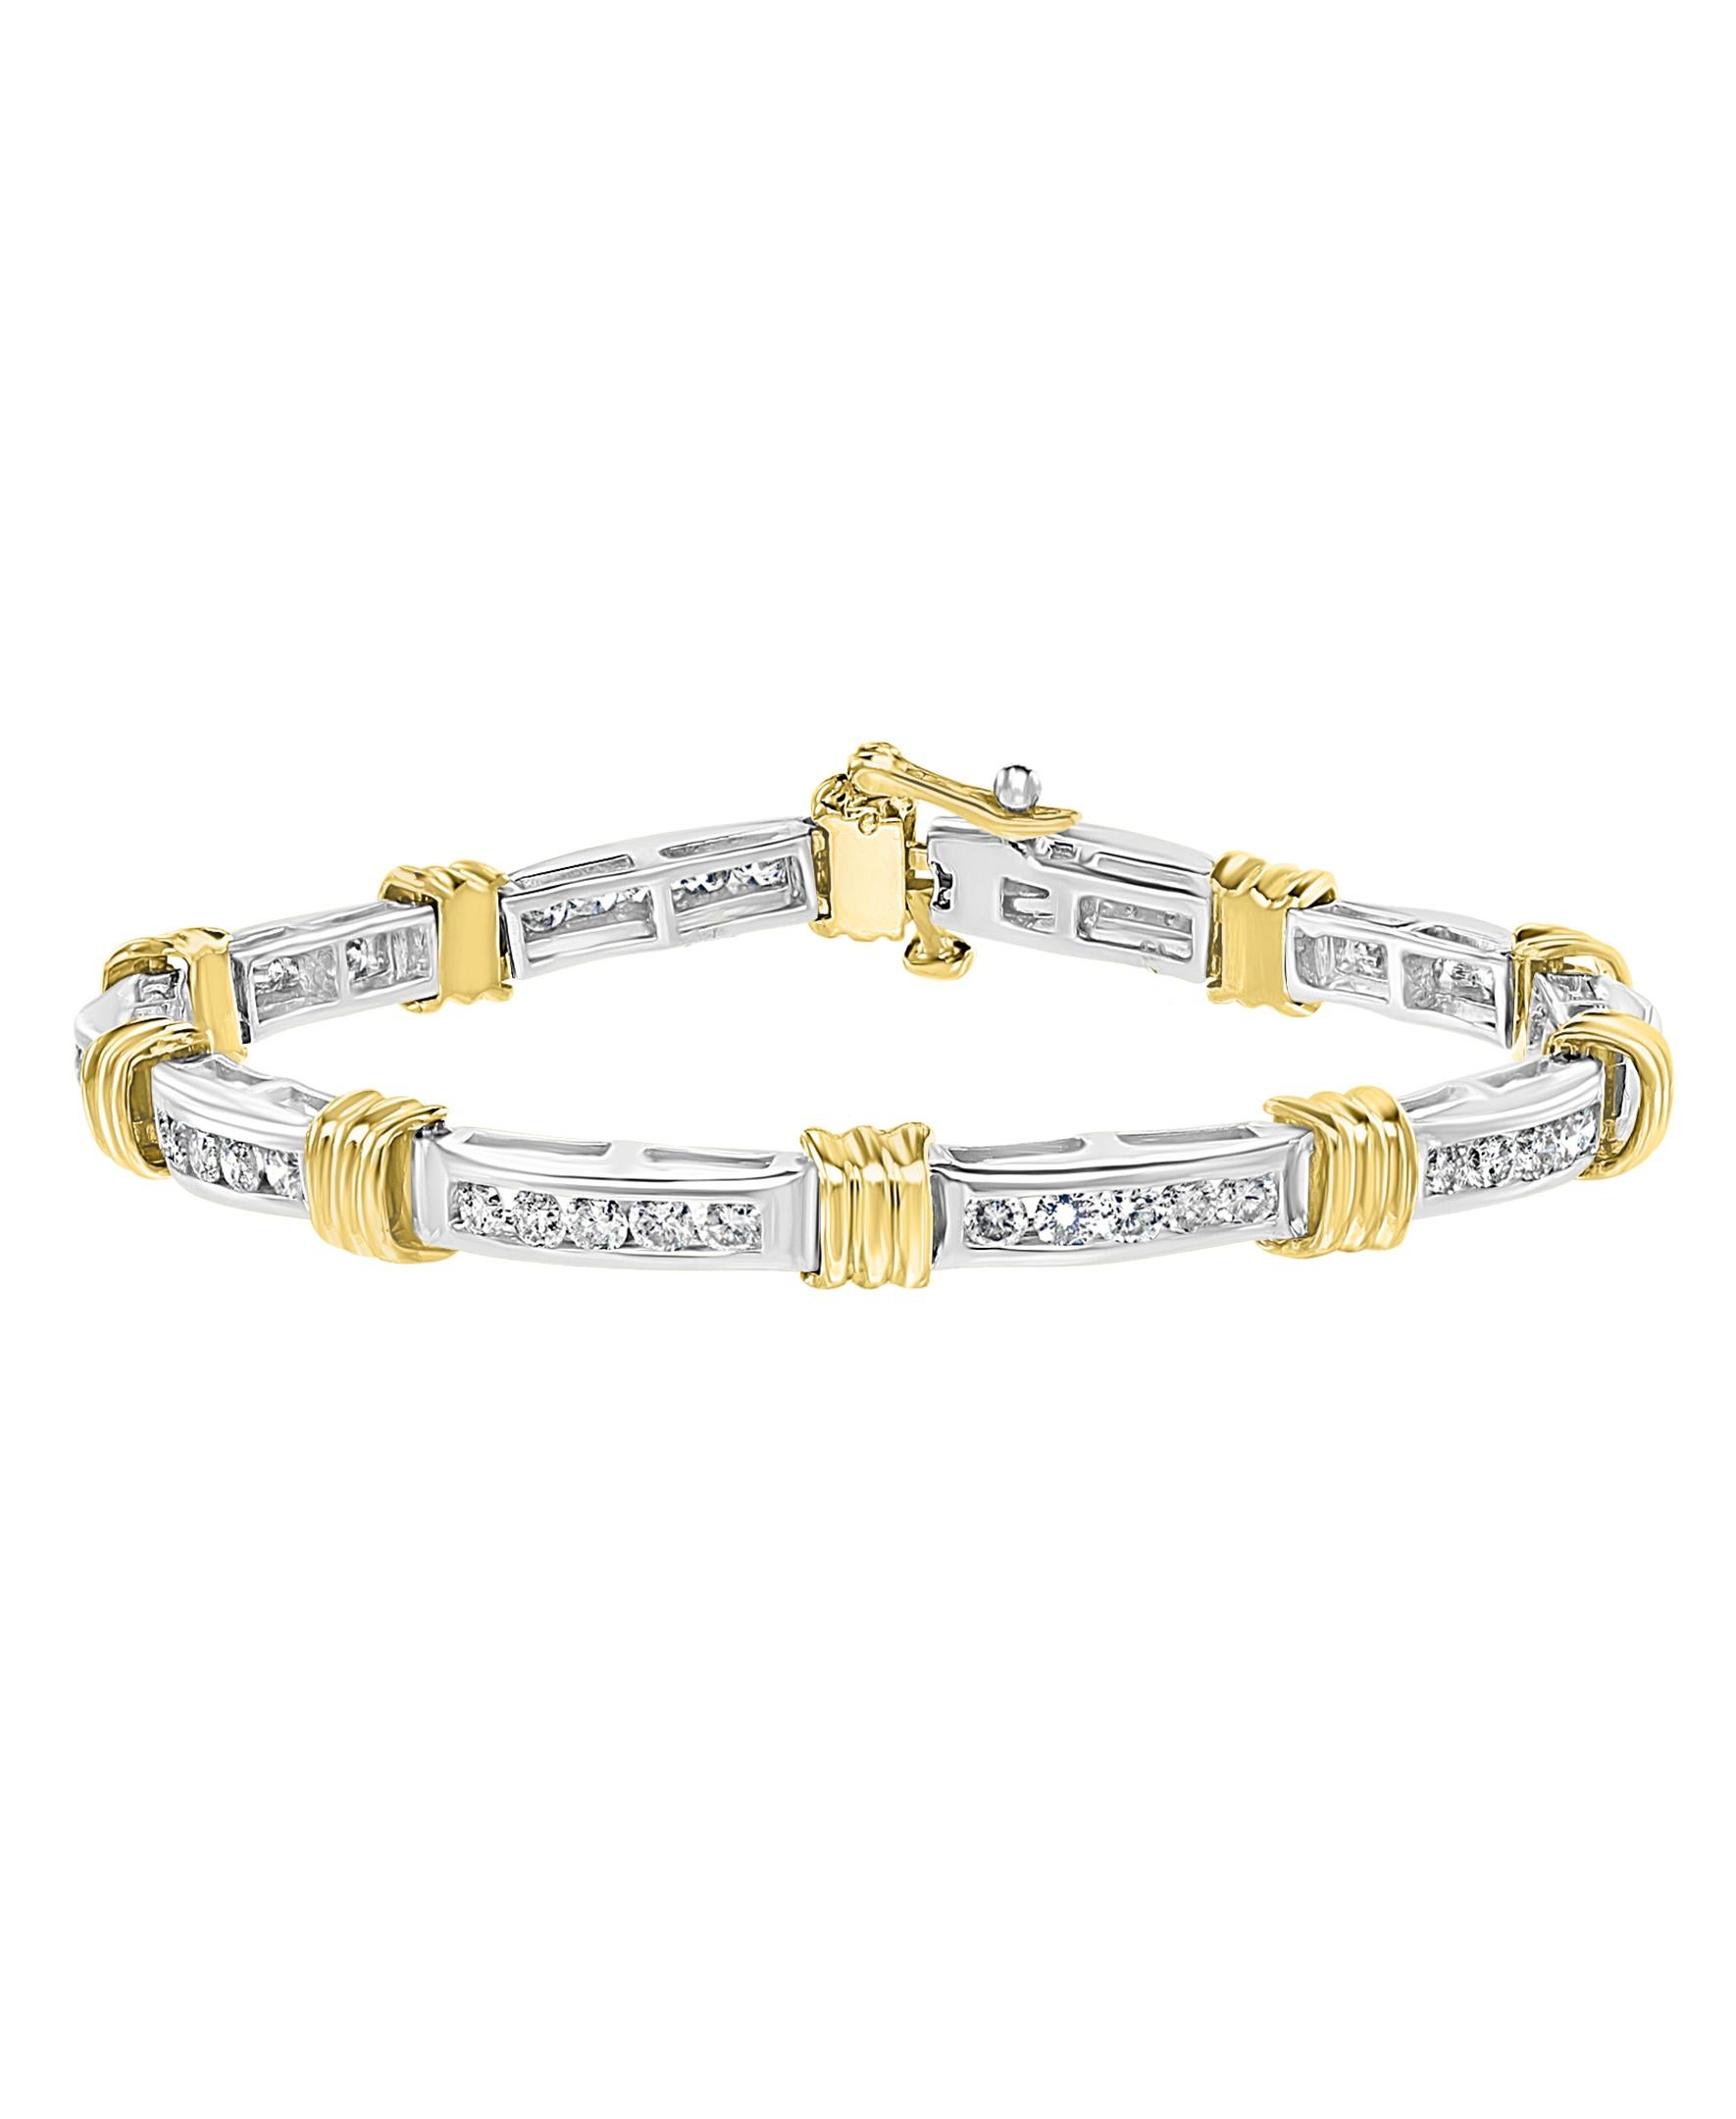 Round Cut Two-Tone 2.8 Carat Diamond Bracelet in 14 Karat Yellow and White Gold, Estate For Sale